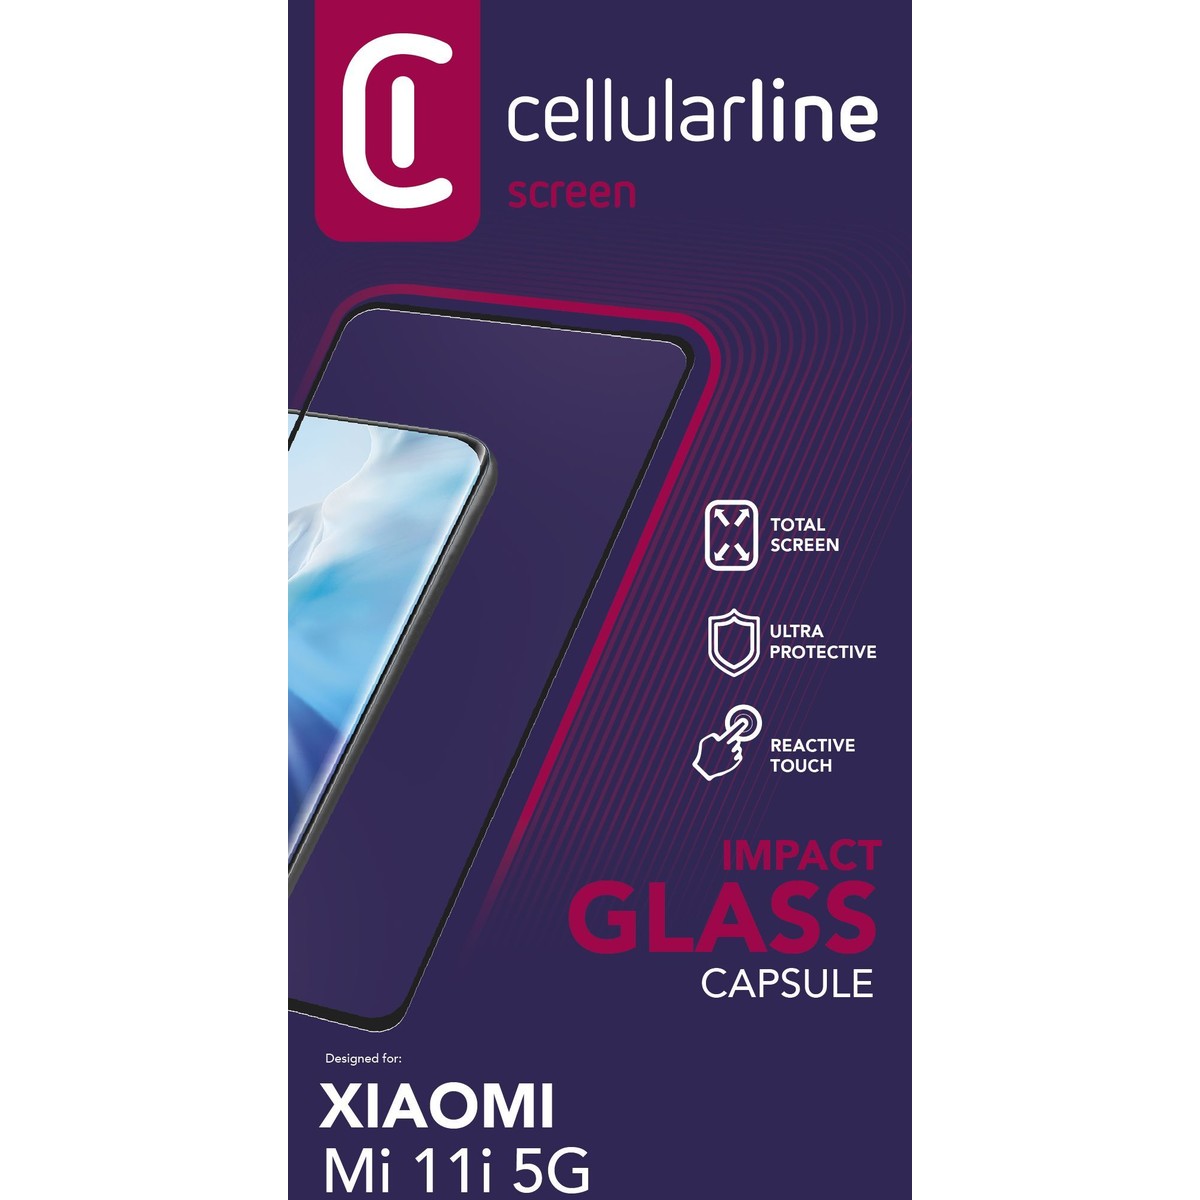 Schutzglas IMPACT GLASS CAPSULE für Xiaomi Mi 11i 5G